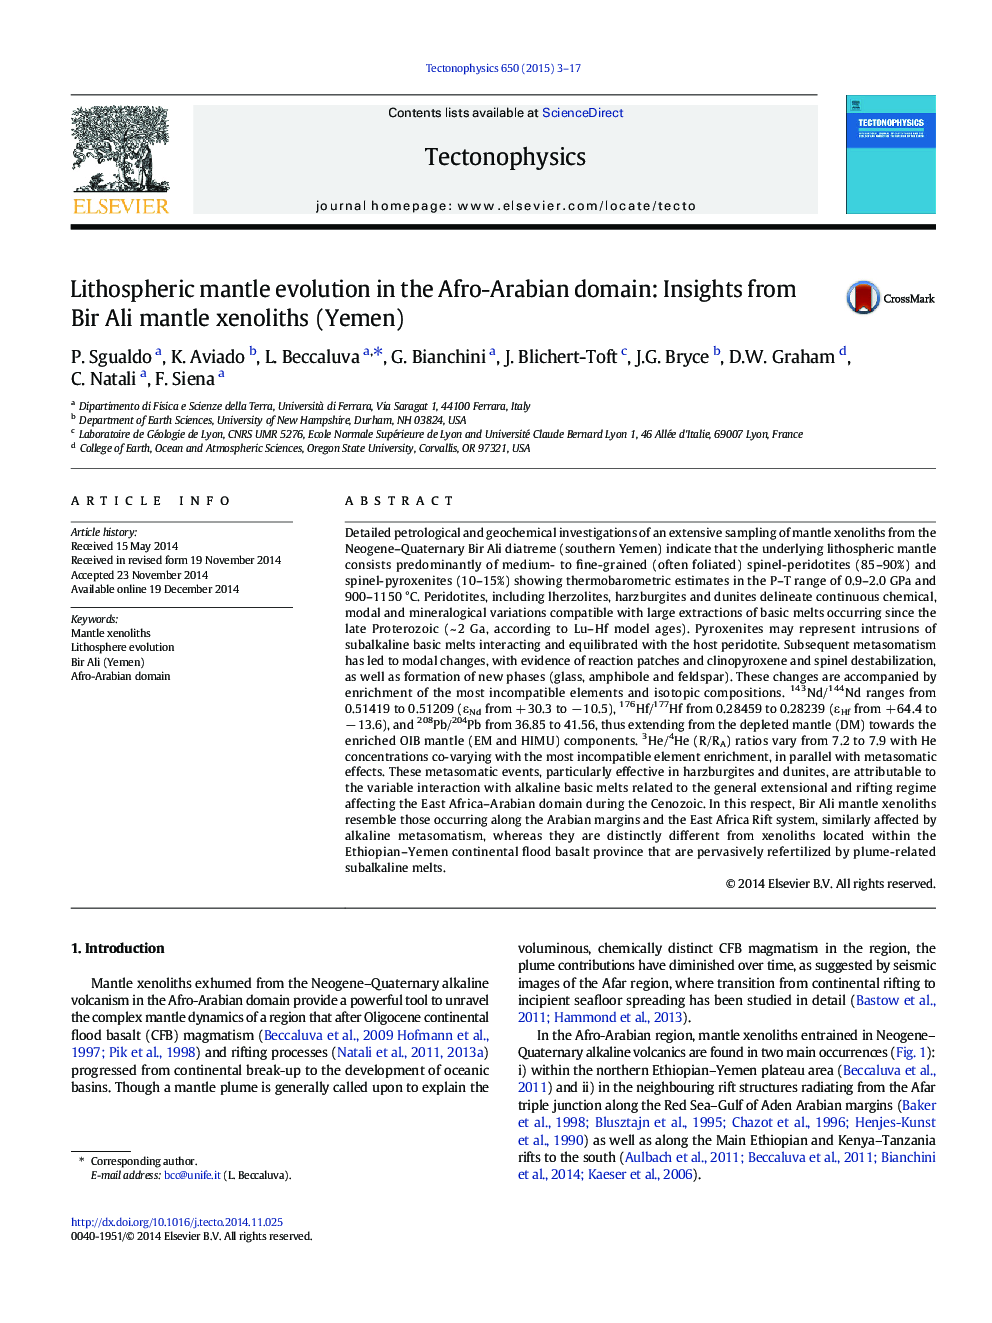 Lithospheric mantle evolution in the Afro-Arabian domain: Insights from Bir Ali mantle xenoliths (Yemen)